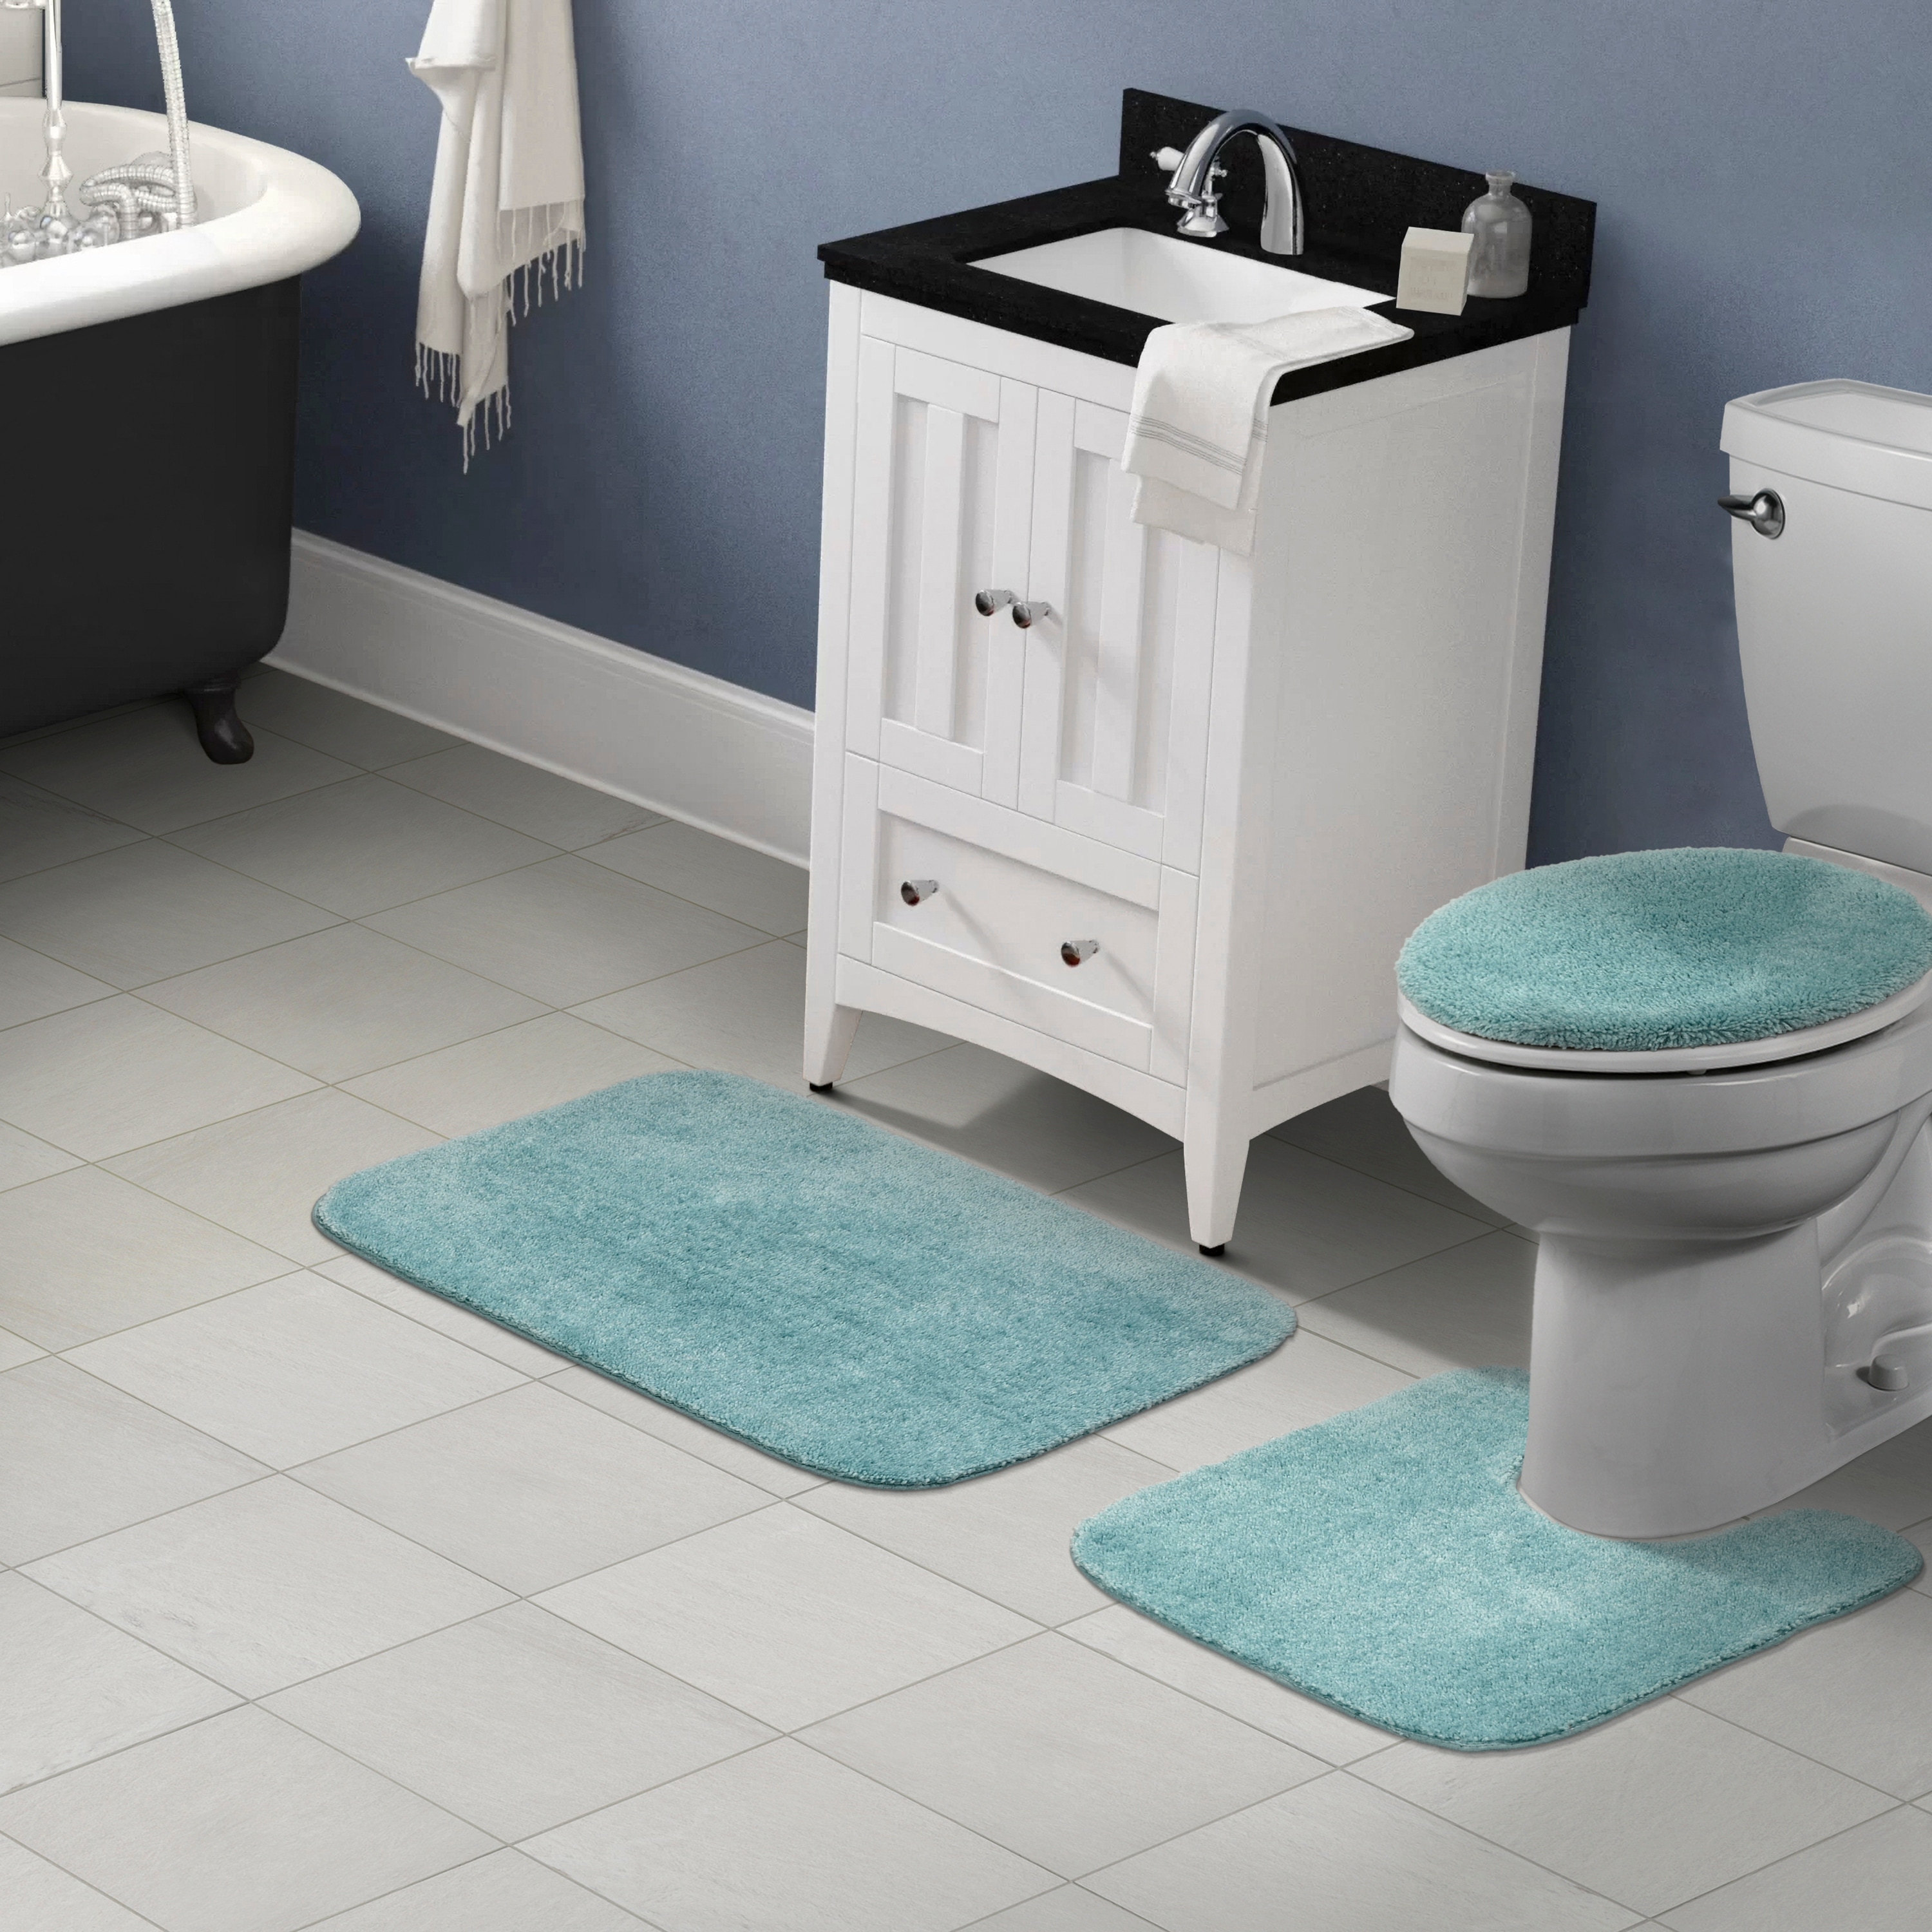 https://ak1.ostkcdn.com/images/products/is/images/direct/d2938aa467958aafe3e2e9601002b87243eda59b/Traditional-Plush-Sea-Foam-Washable-Nylon-Bathroom-Rug-Runner.jpg